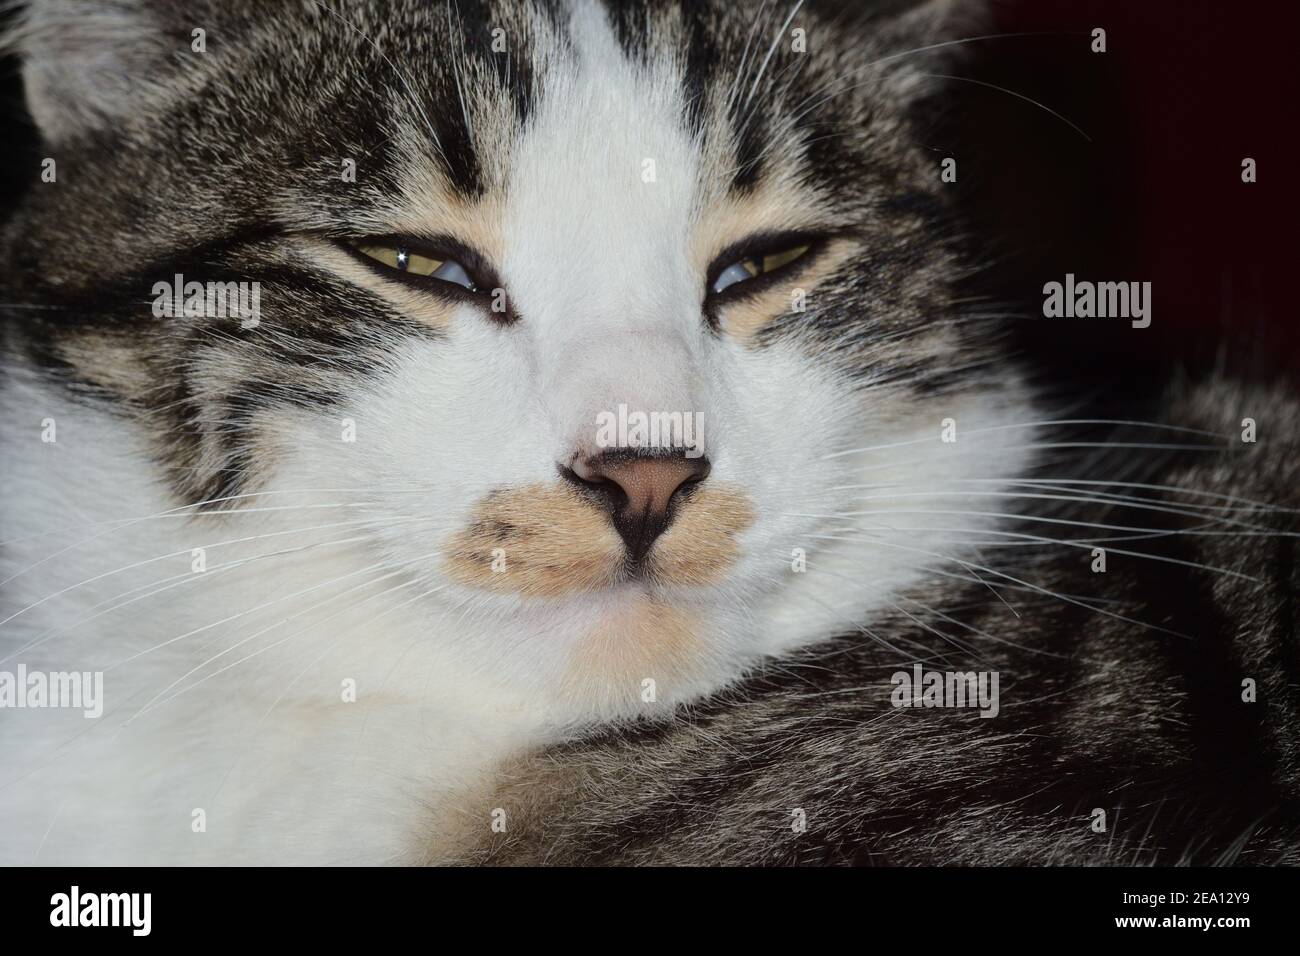 closeup portrait of a tabby cat Stock Photo